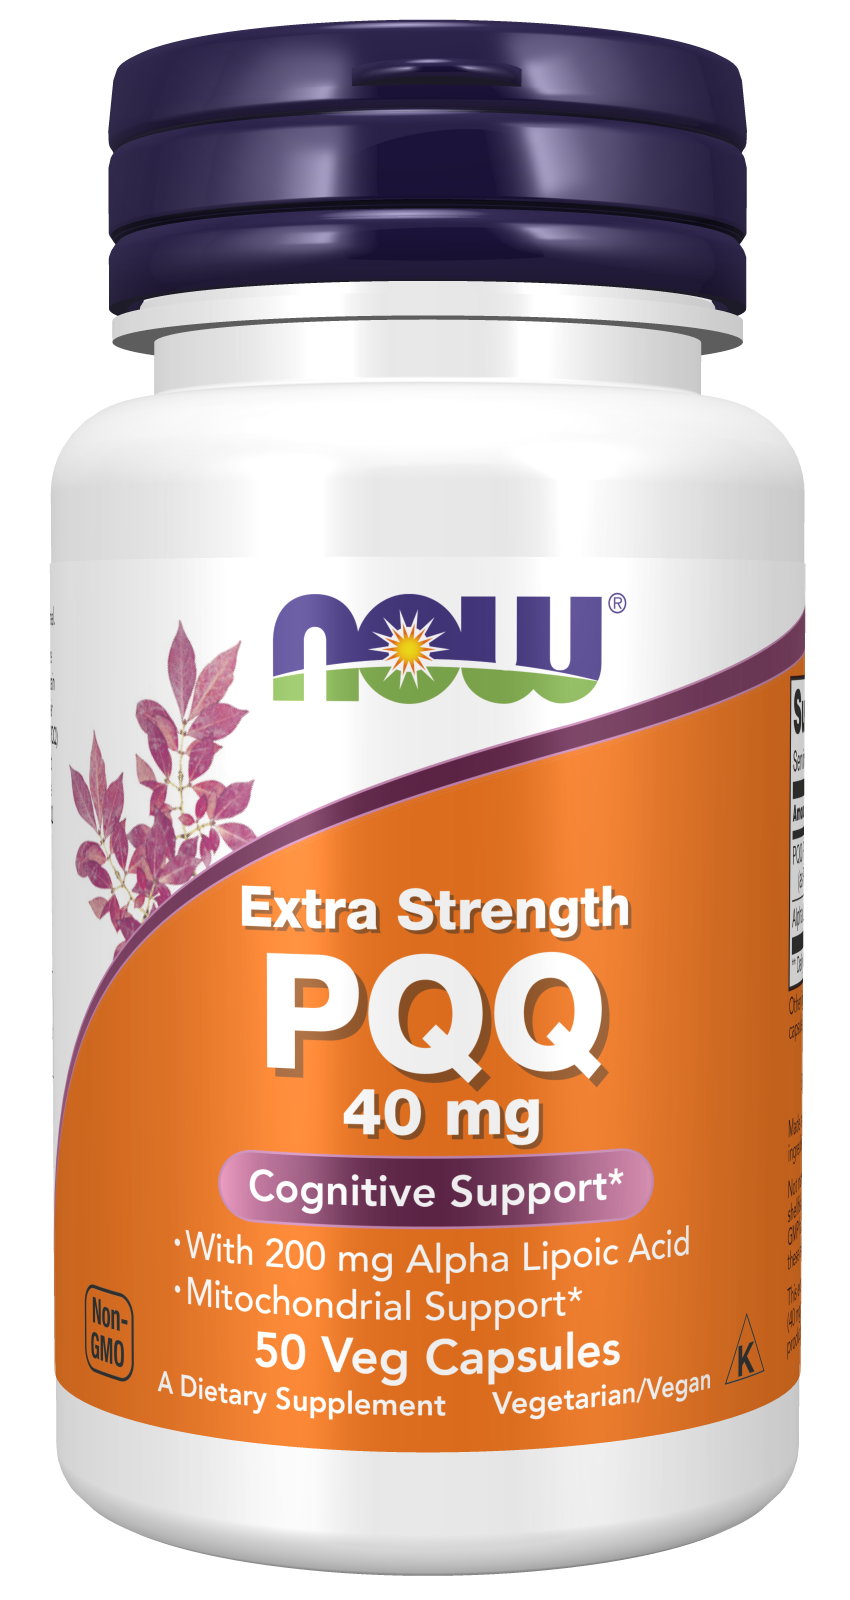 PQQ, Extra Strength 40 mg - 50 Veg Capsules Bottle Front